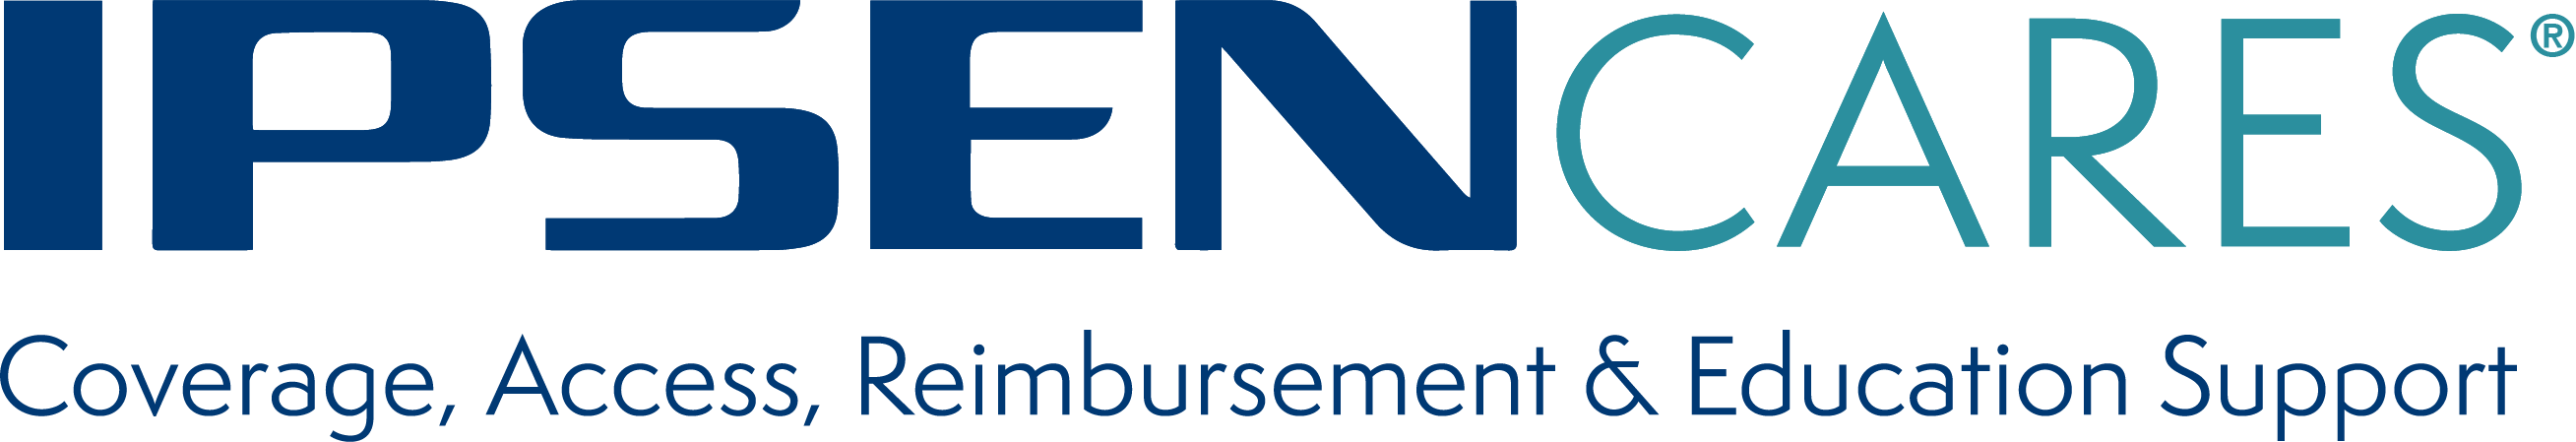 IPSEN CARES Coverage, Access, Reimbursement & Education Support logo